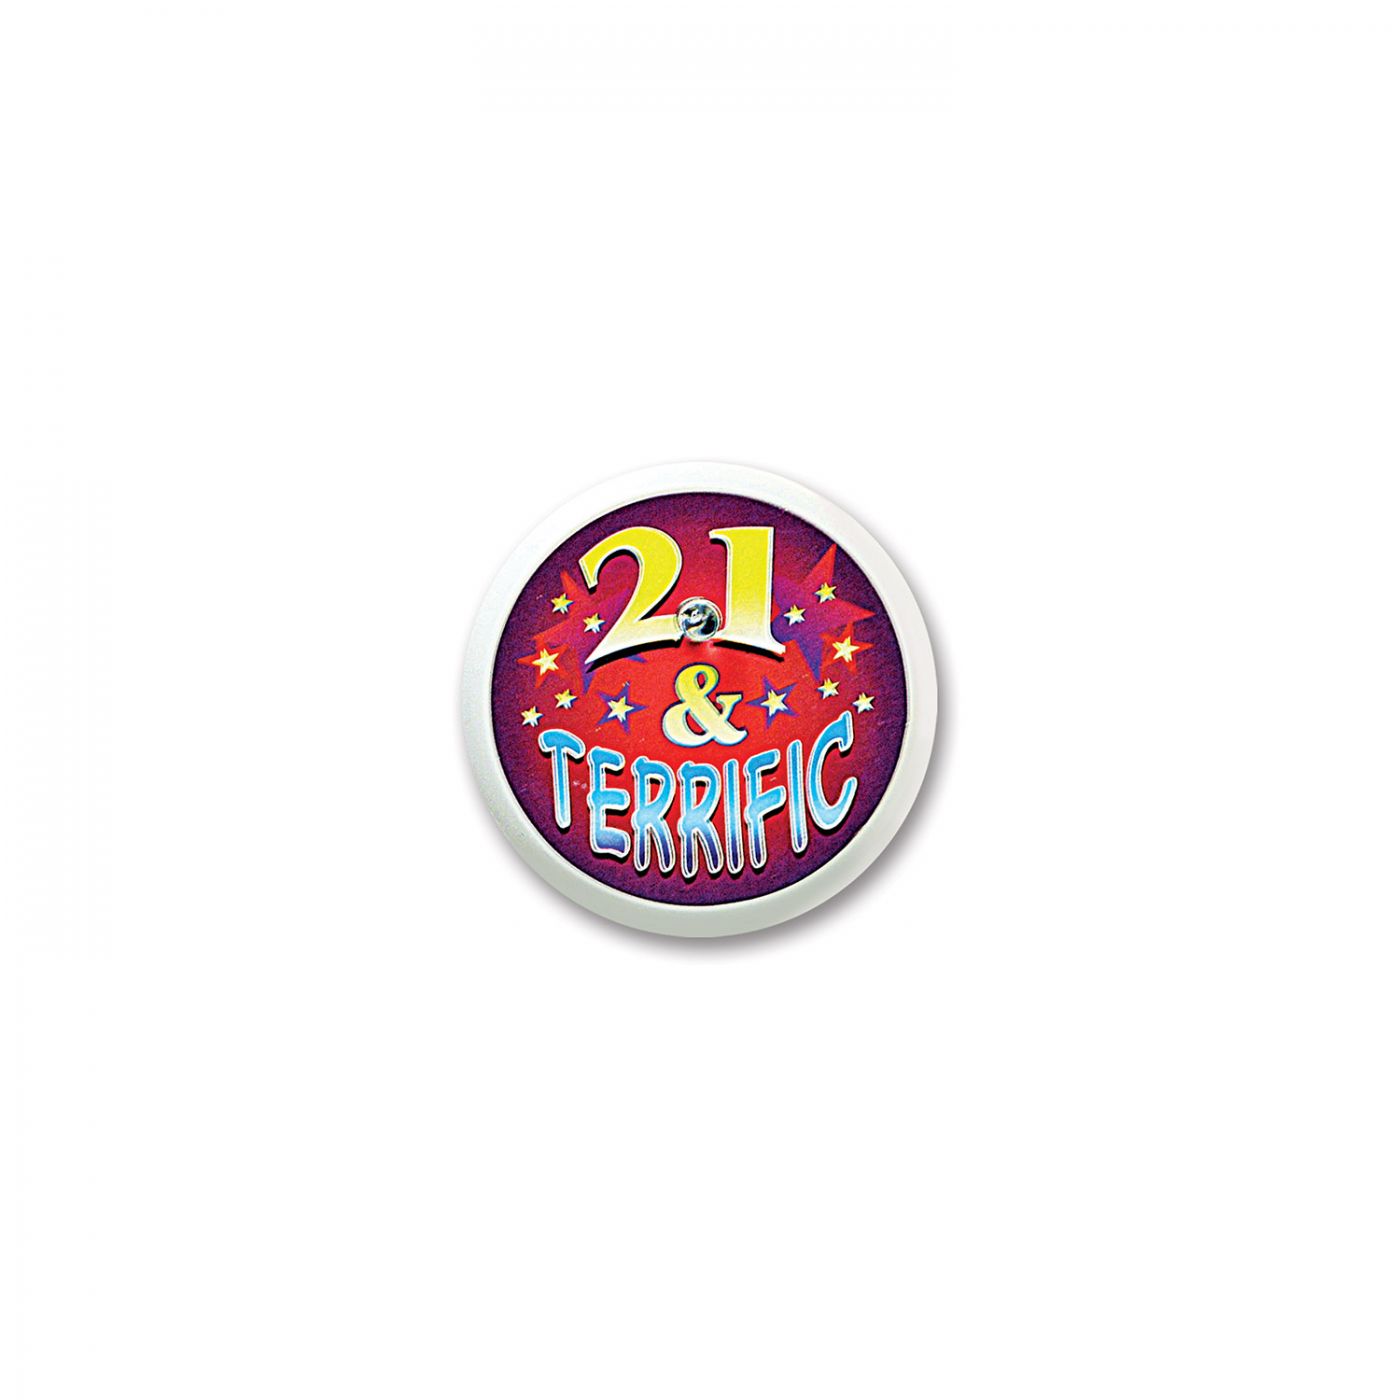 Image of 21 & Terrific Blinking Button (6)